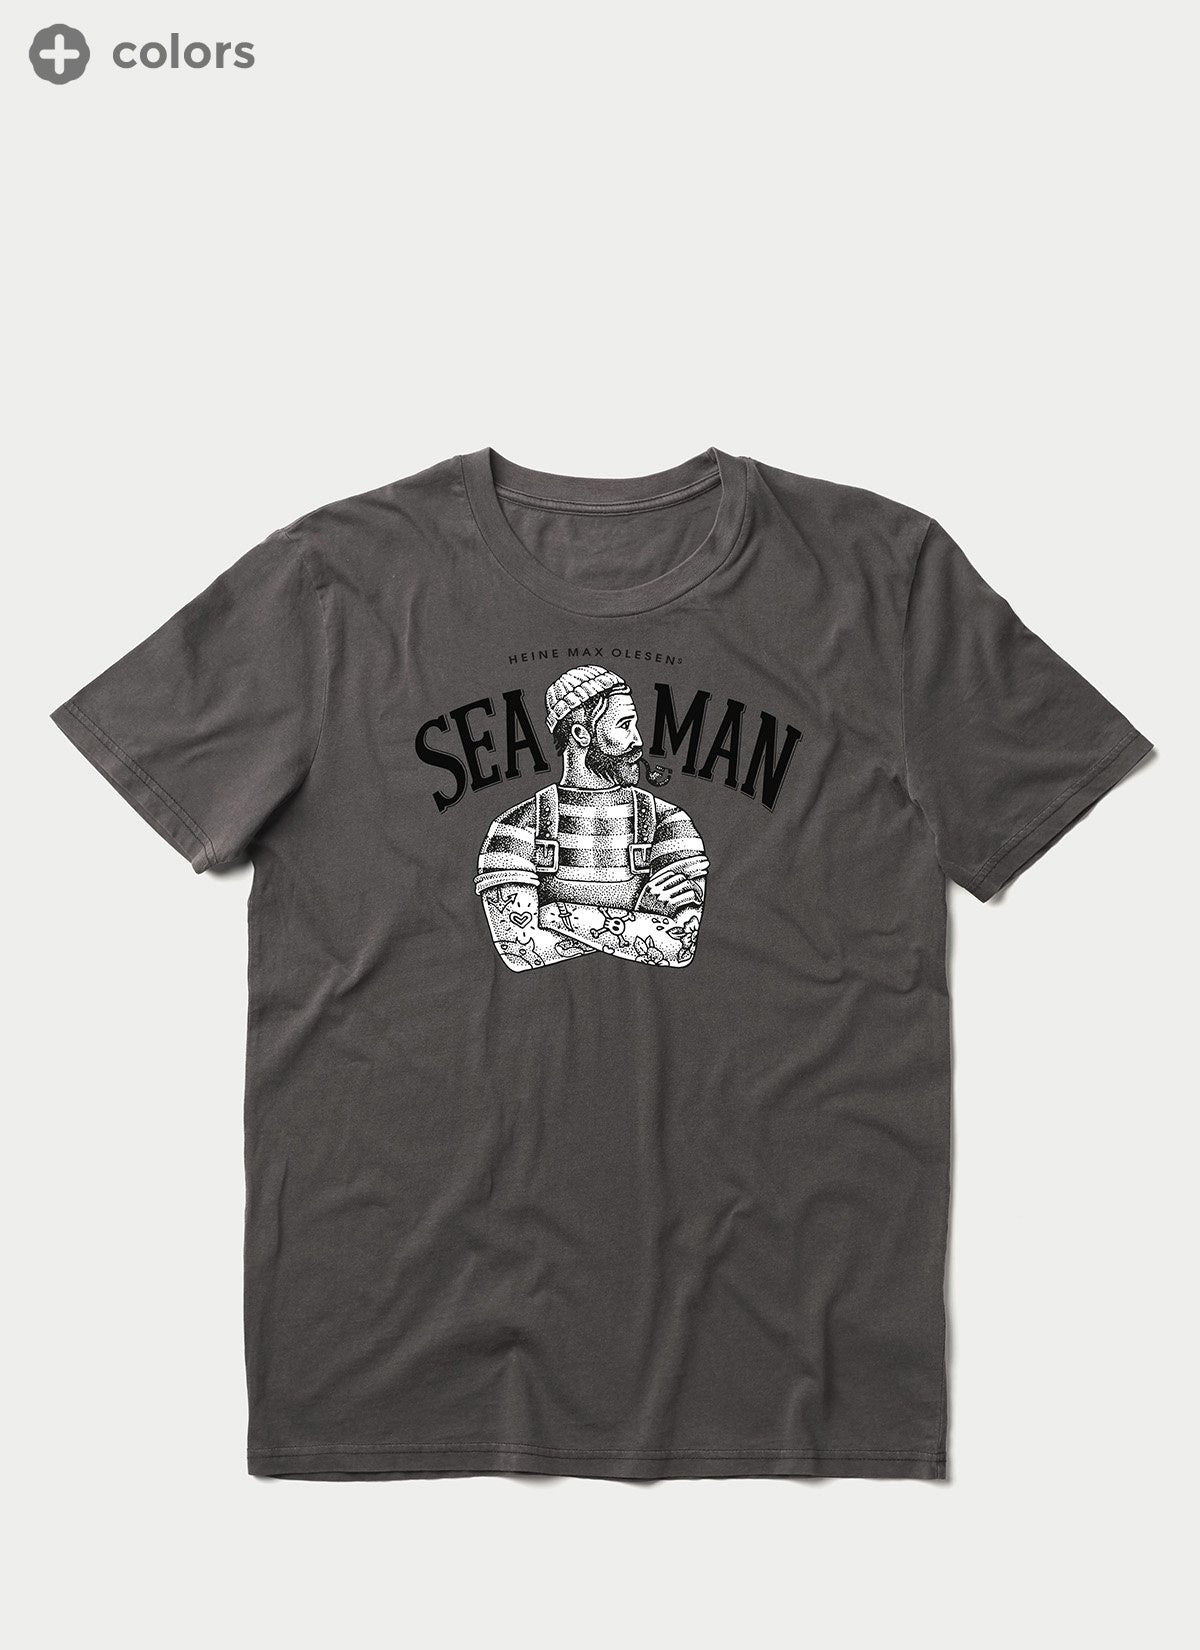 Tee "Sea Man"